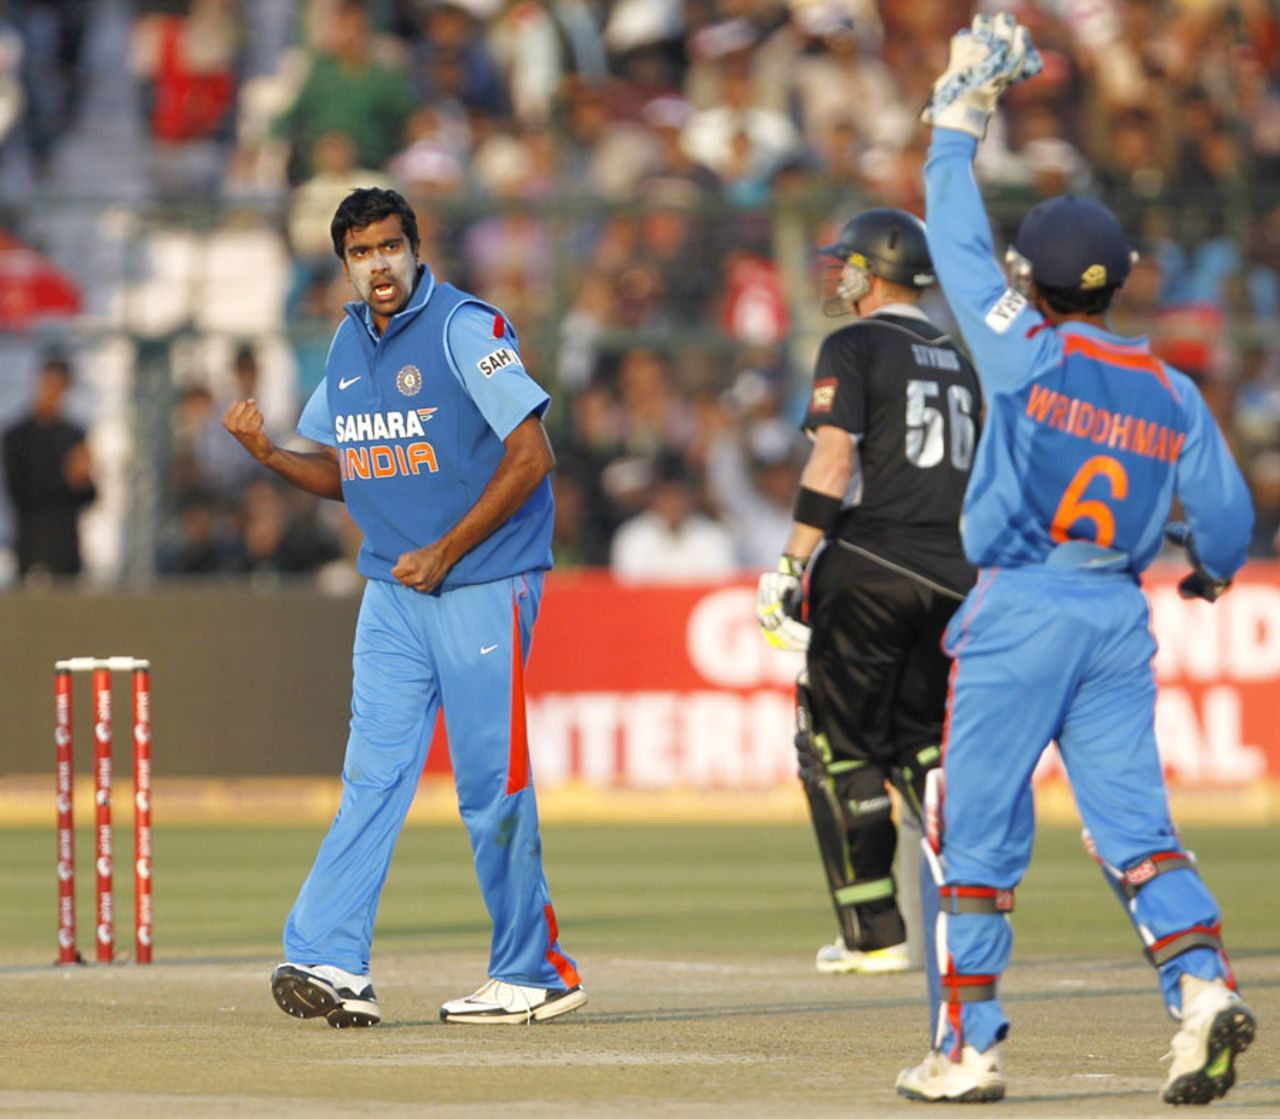 R Ashwin celebrates the wicket of Martin Guptill, India v New Zealand, 2nd ODI, Jaipur, December 1, 2010